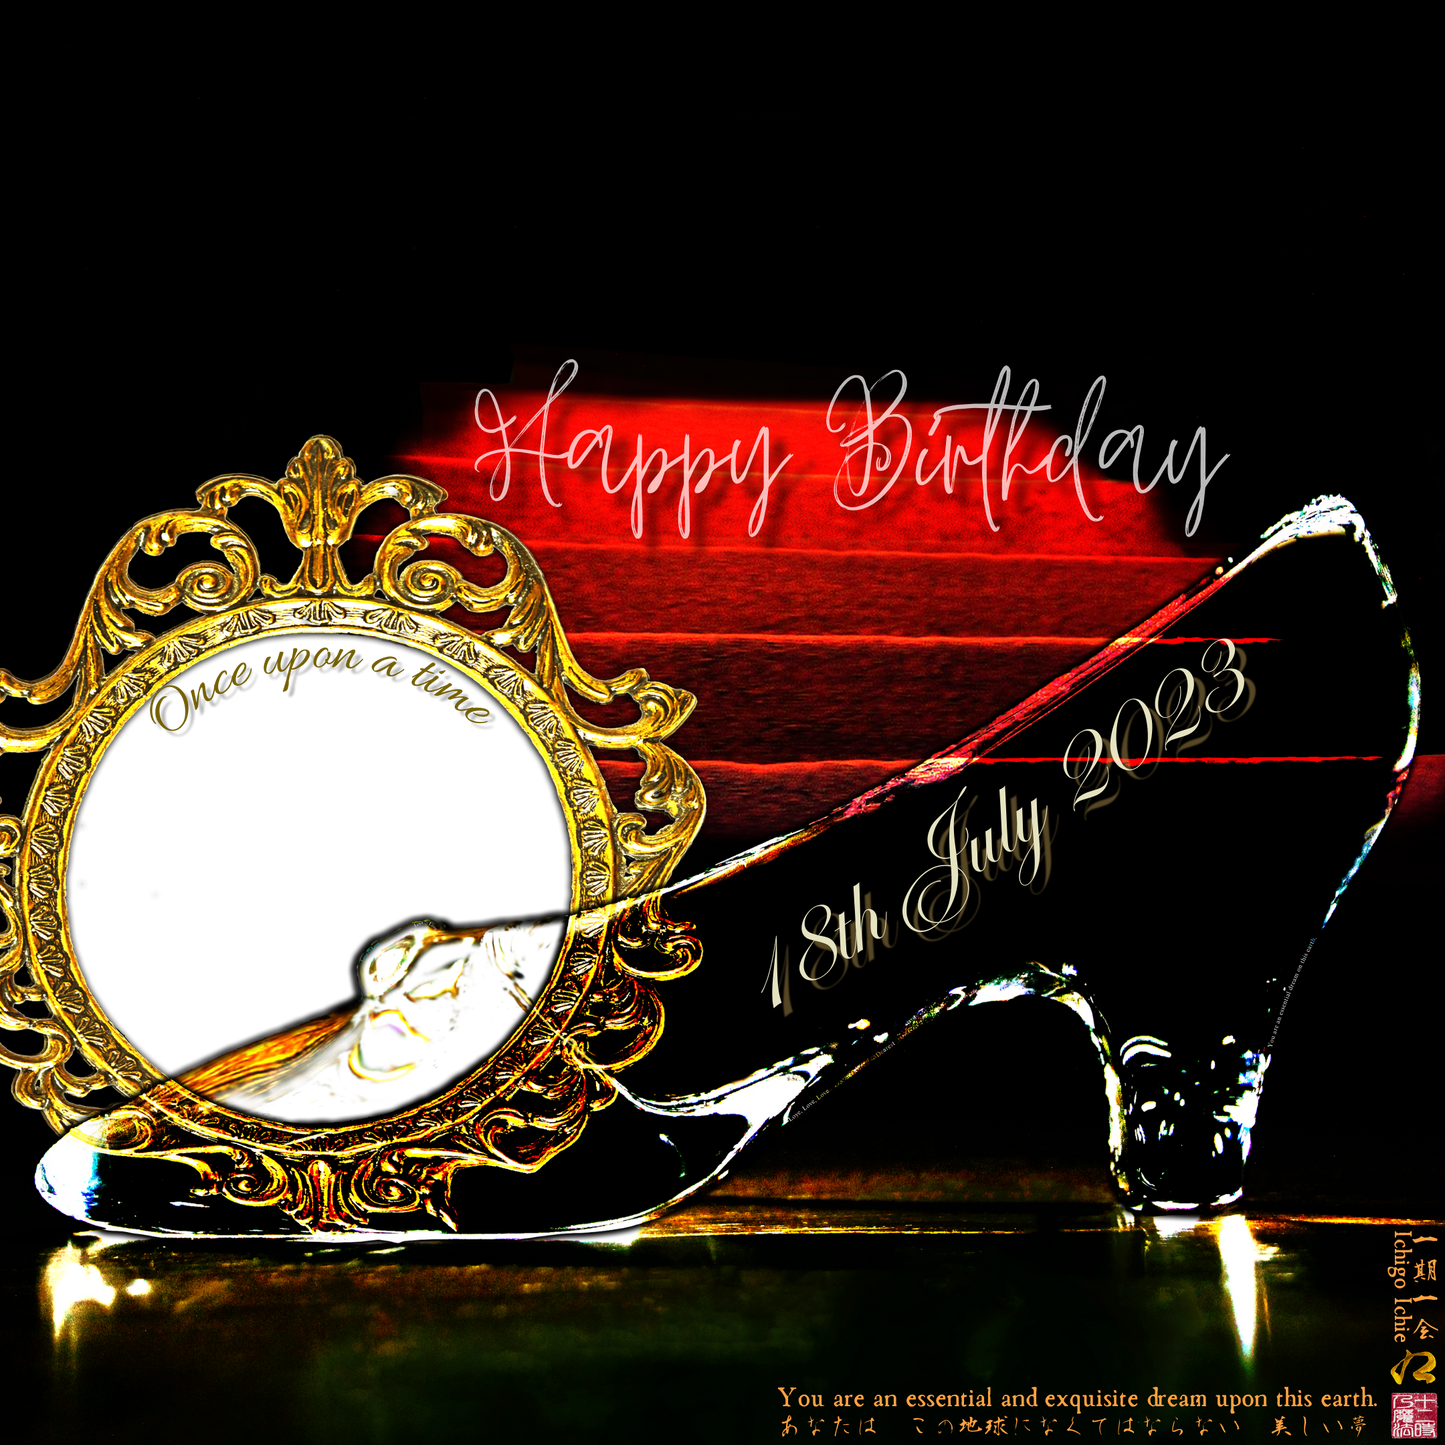 Happy Birthday Glass Slipper "Ichigo Ichie" 18th July 2023 the Left (1-of-1) NFT Art